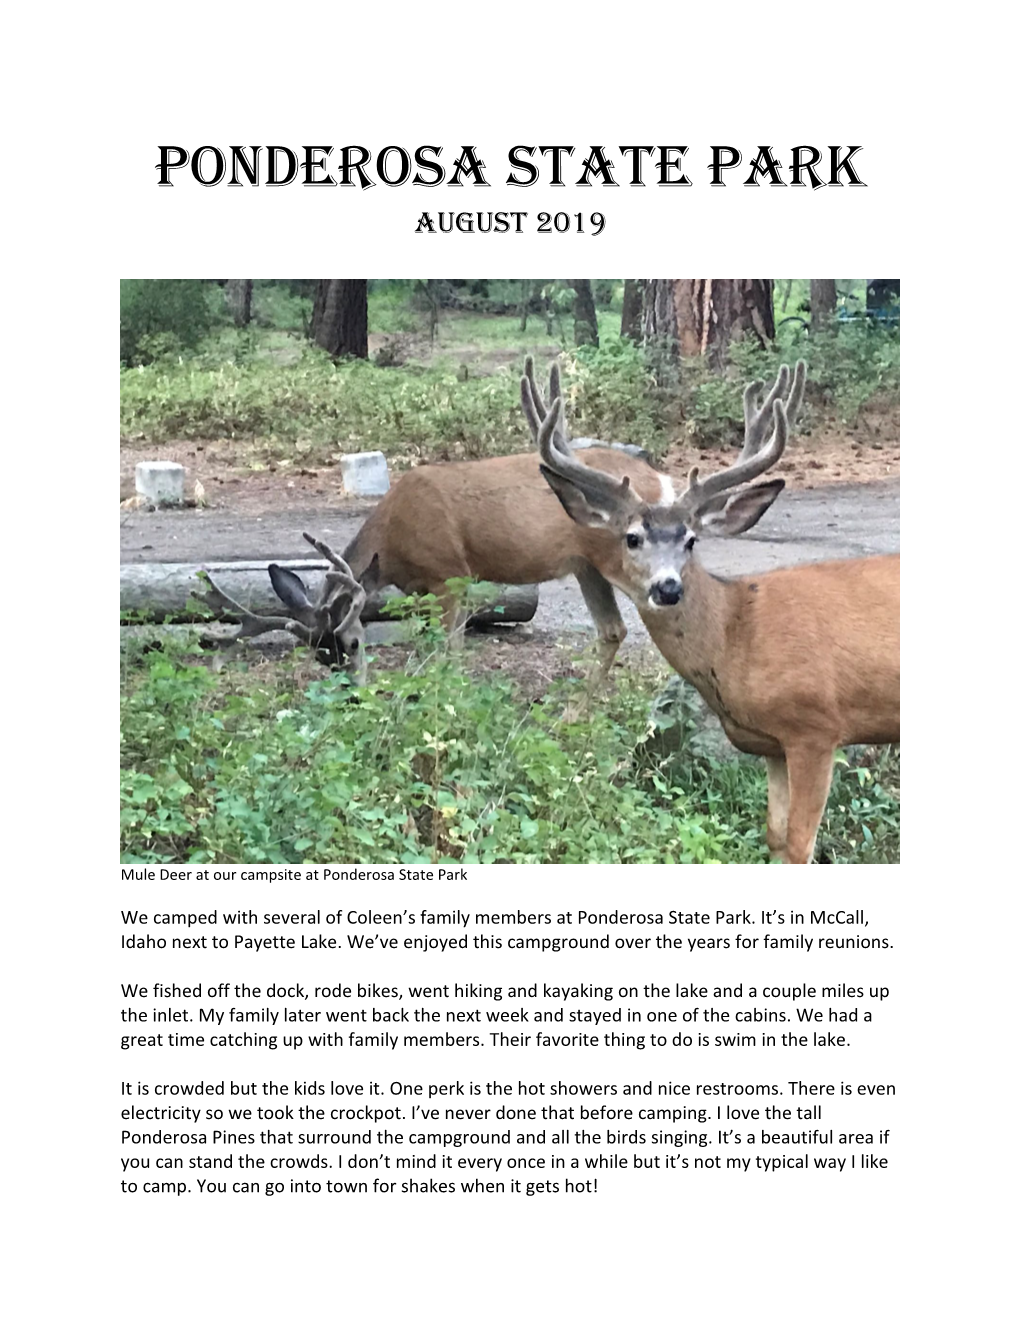 Ponderosa State Park August 2019